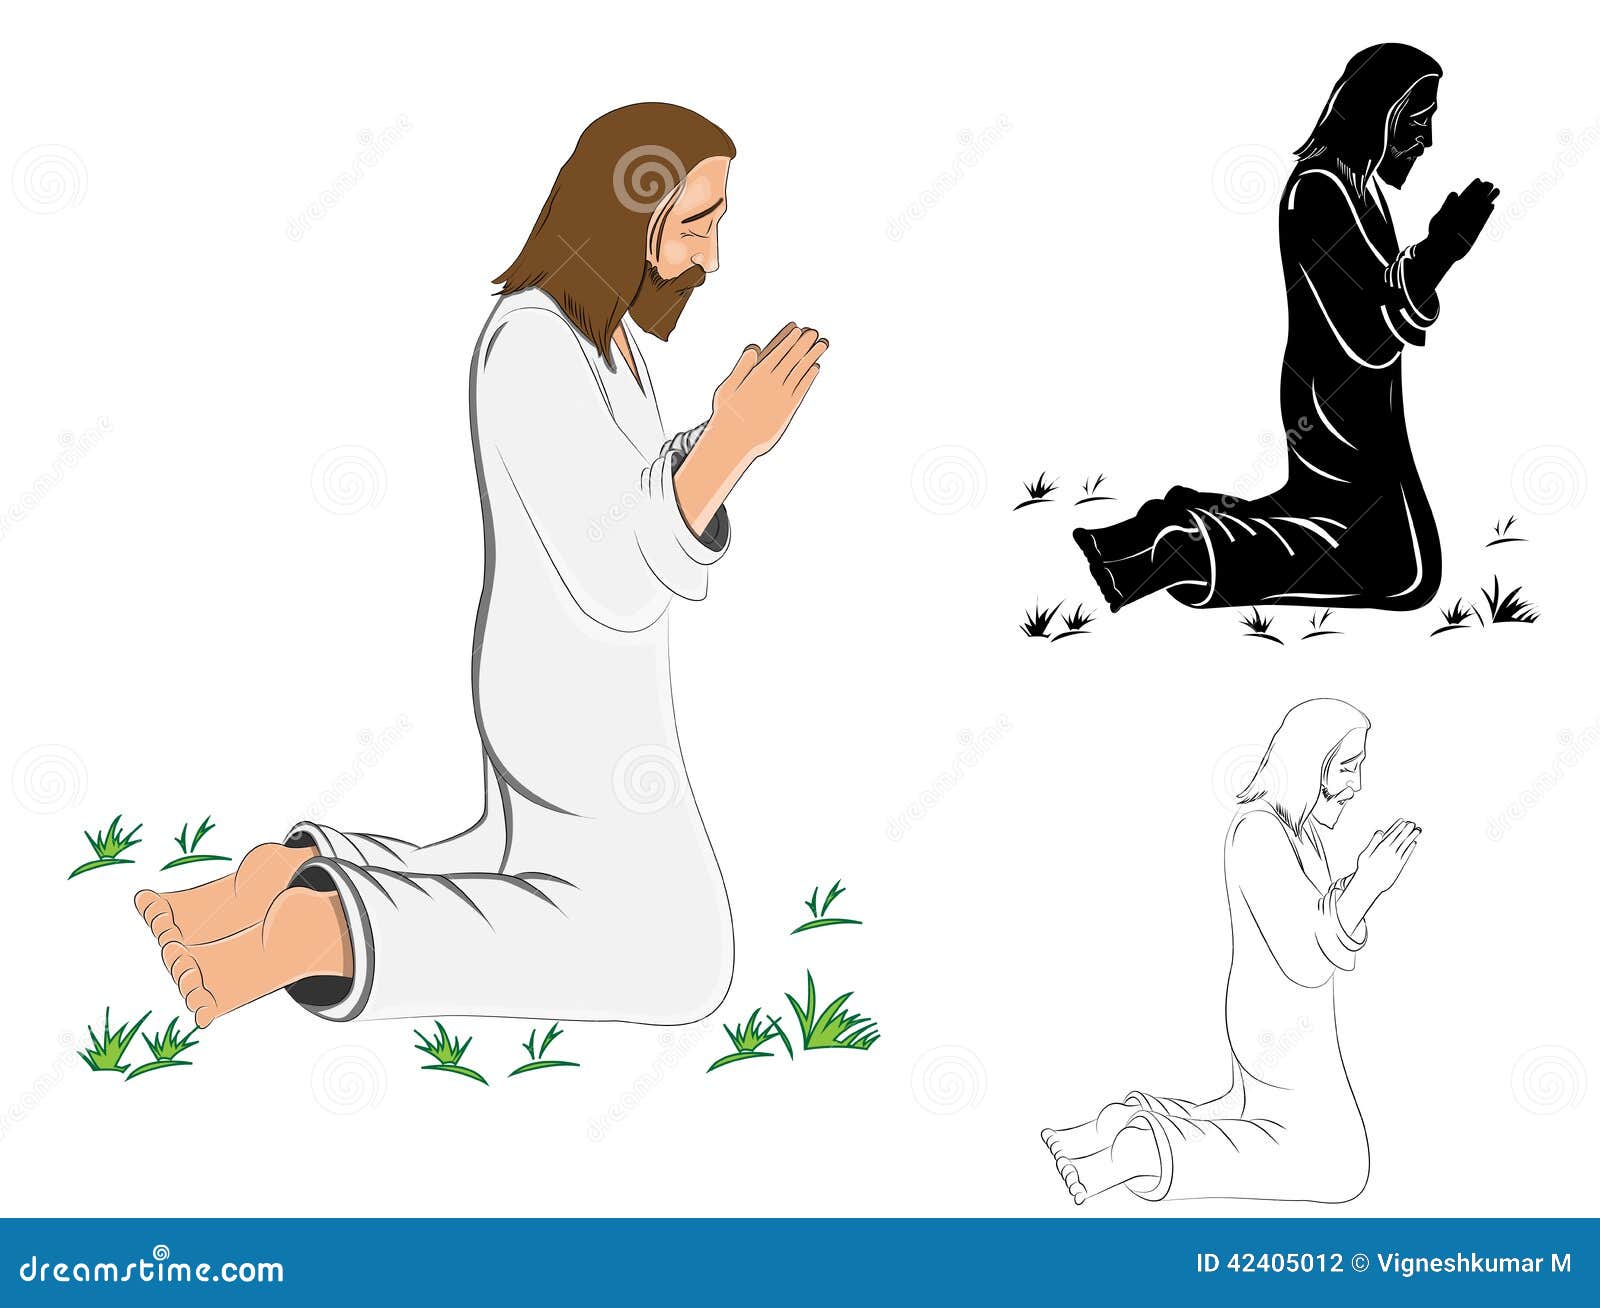 clipart jesus praying in the garden - photo #12